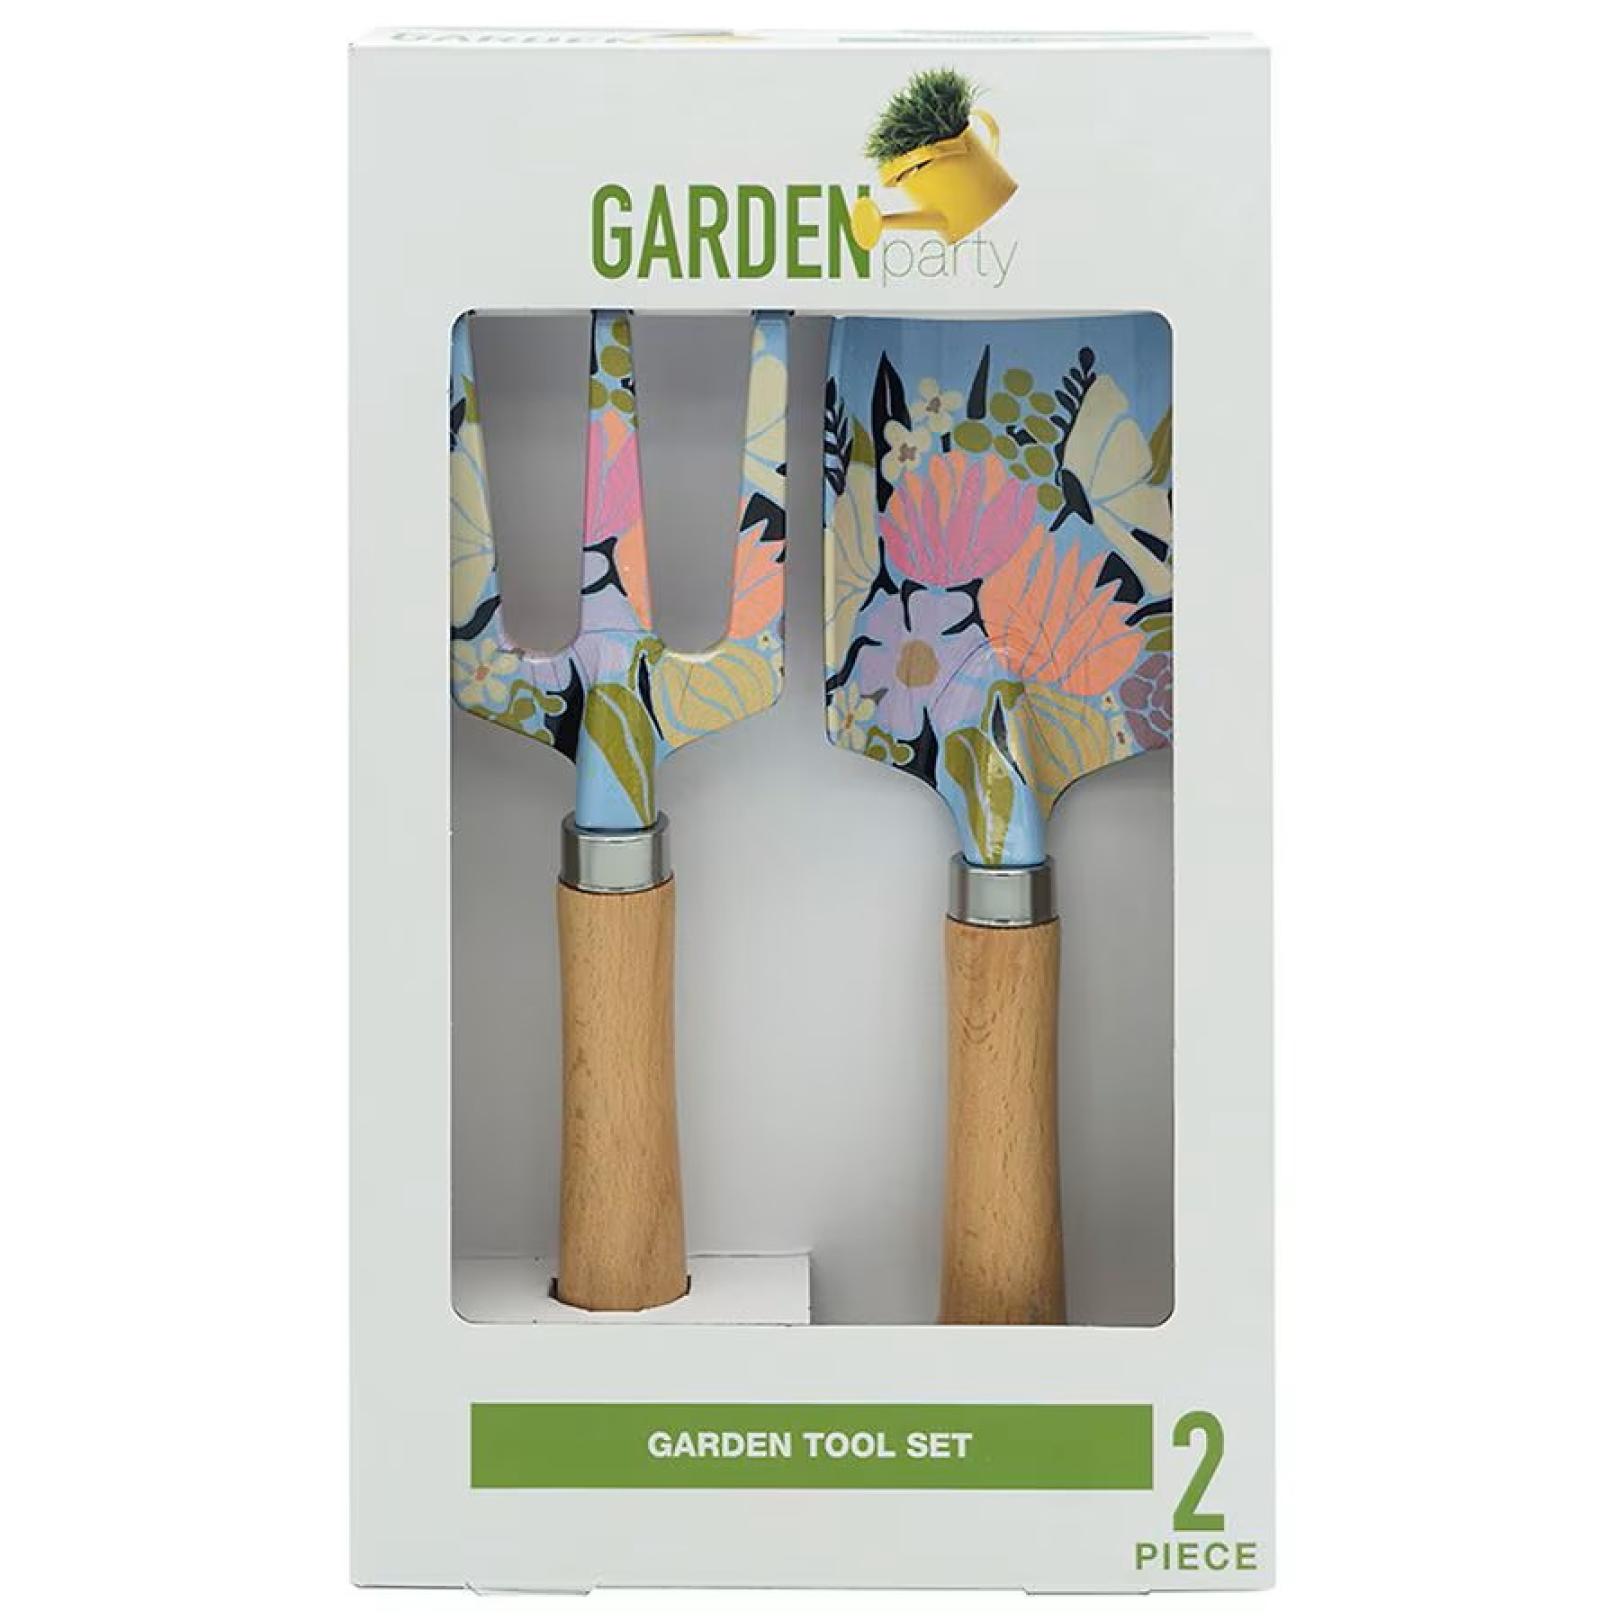 Garden tool kit